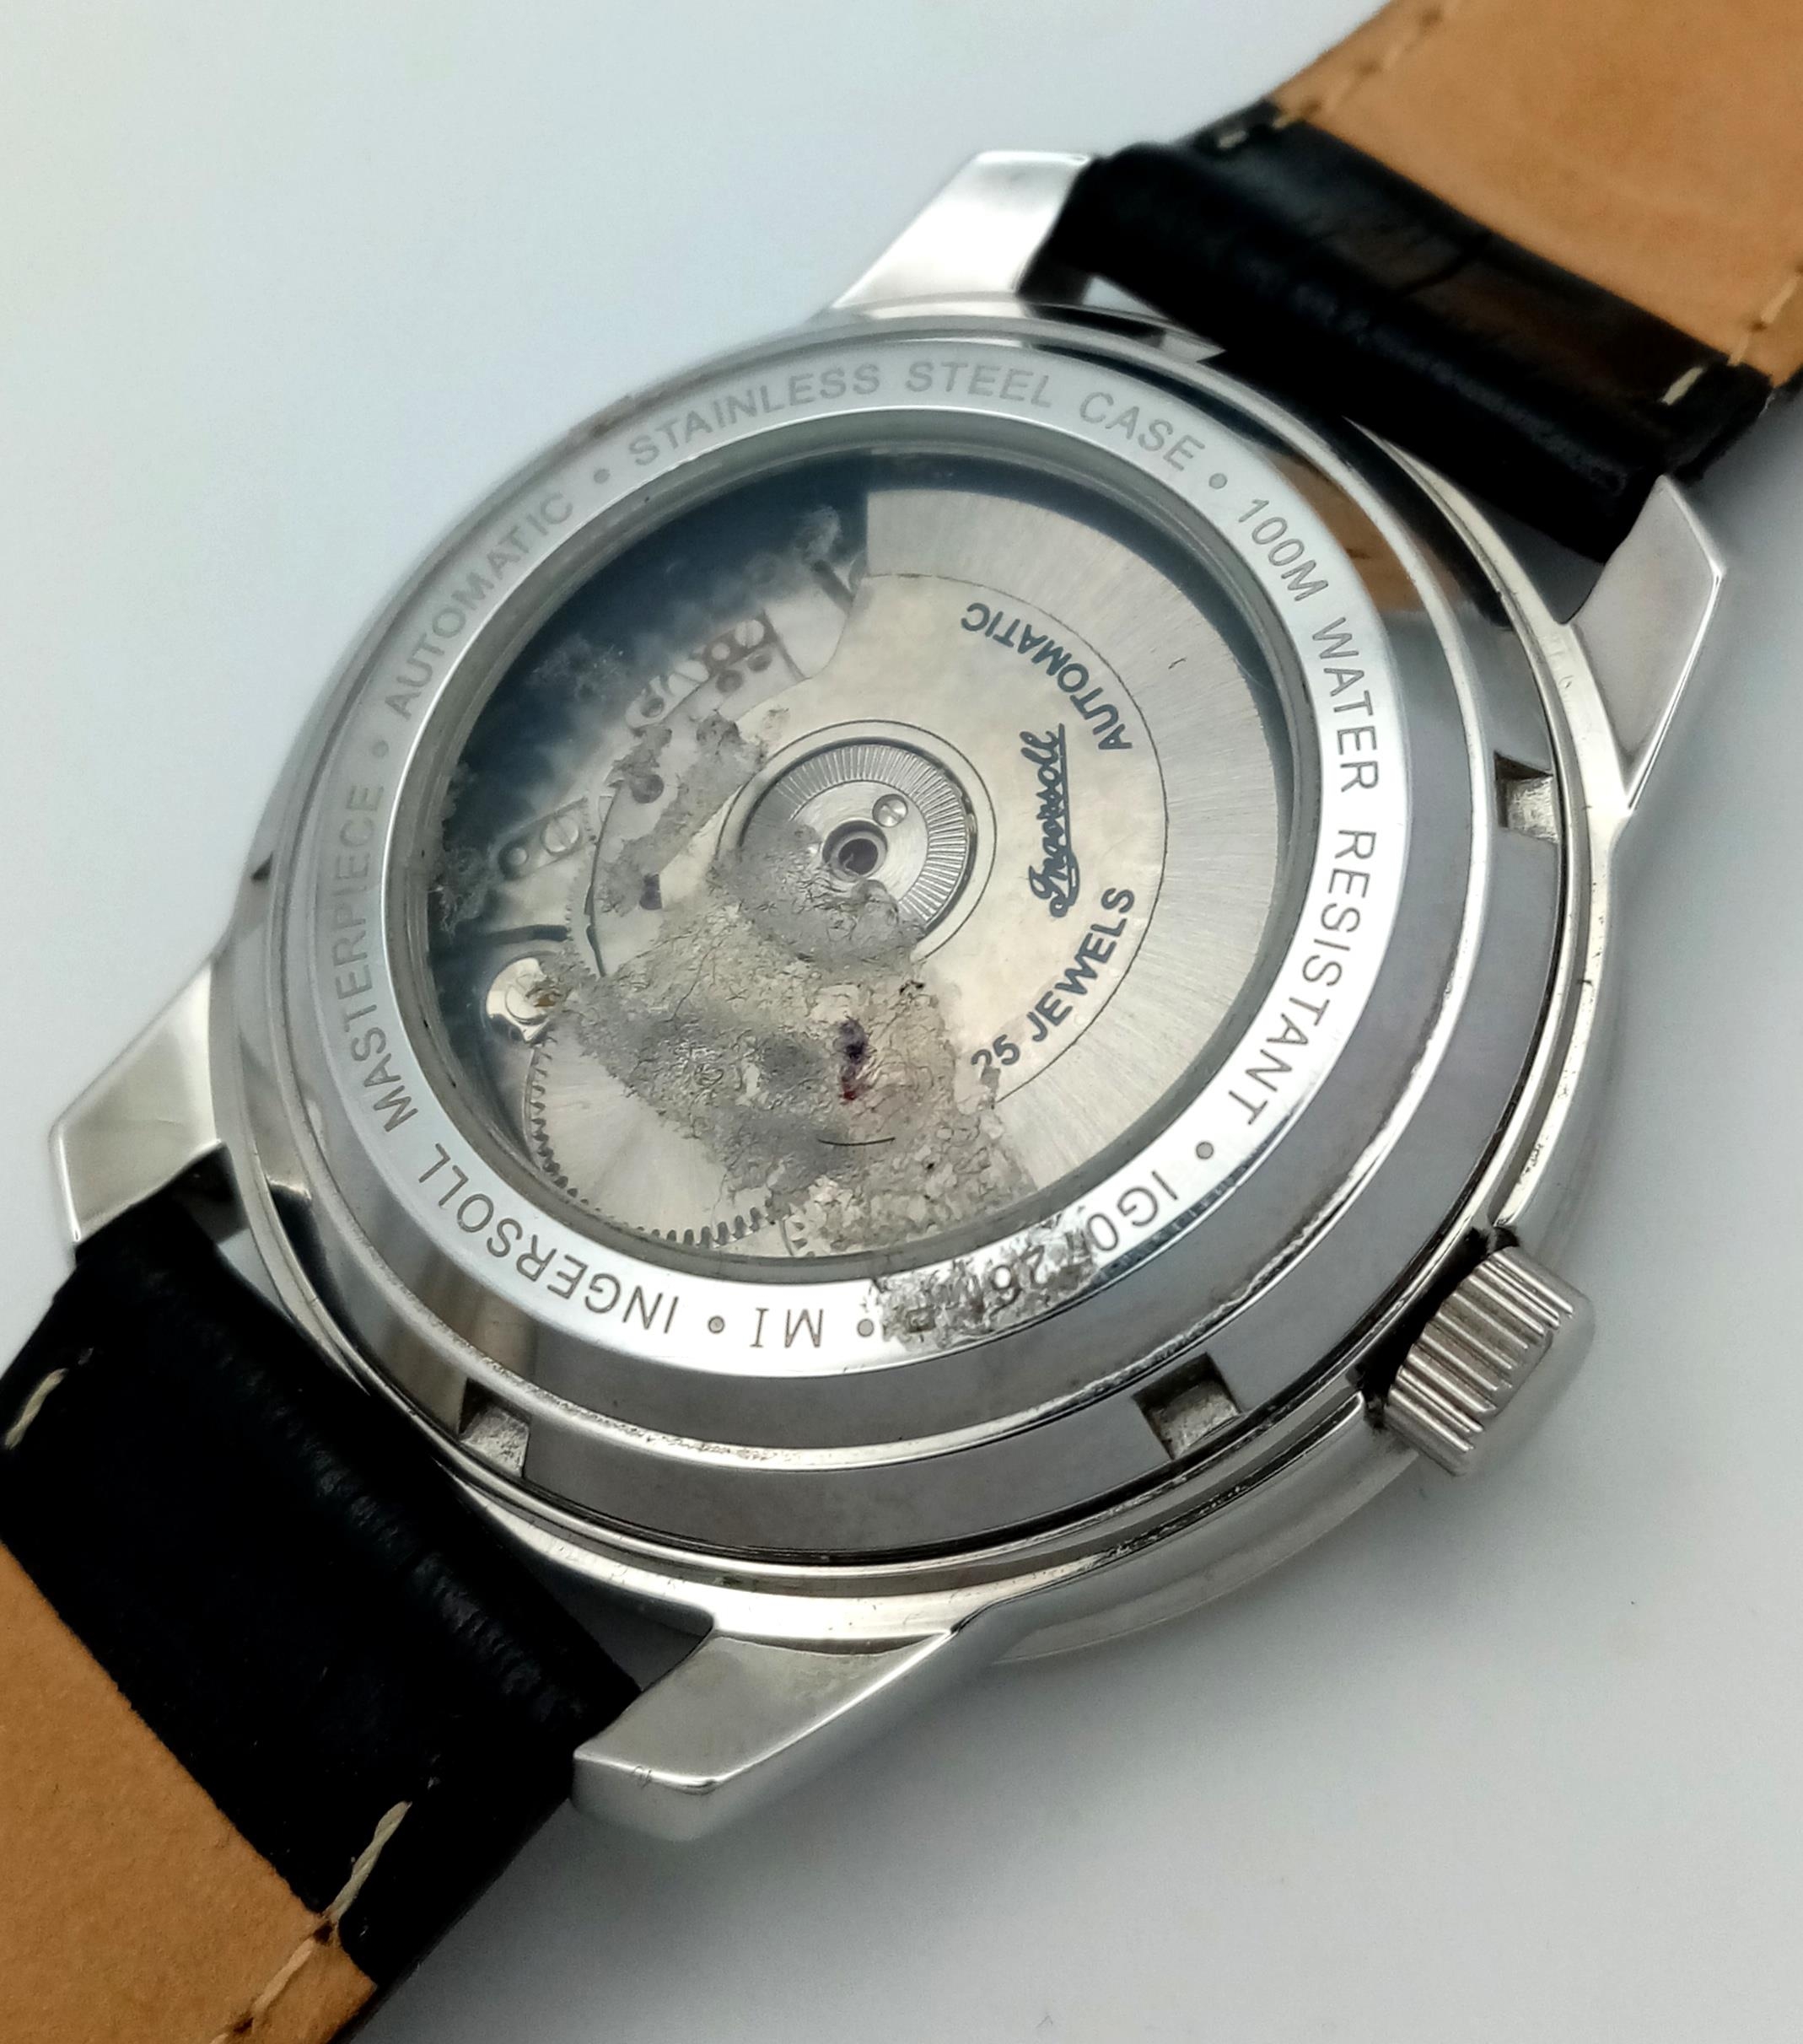 An Ingersoll Masterpiece Skeleton Gents Automatic Watch. Black leather strap. Stainless steel case - - Bild 3 aus 5